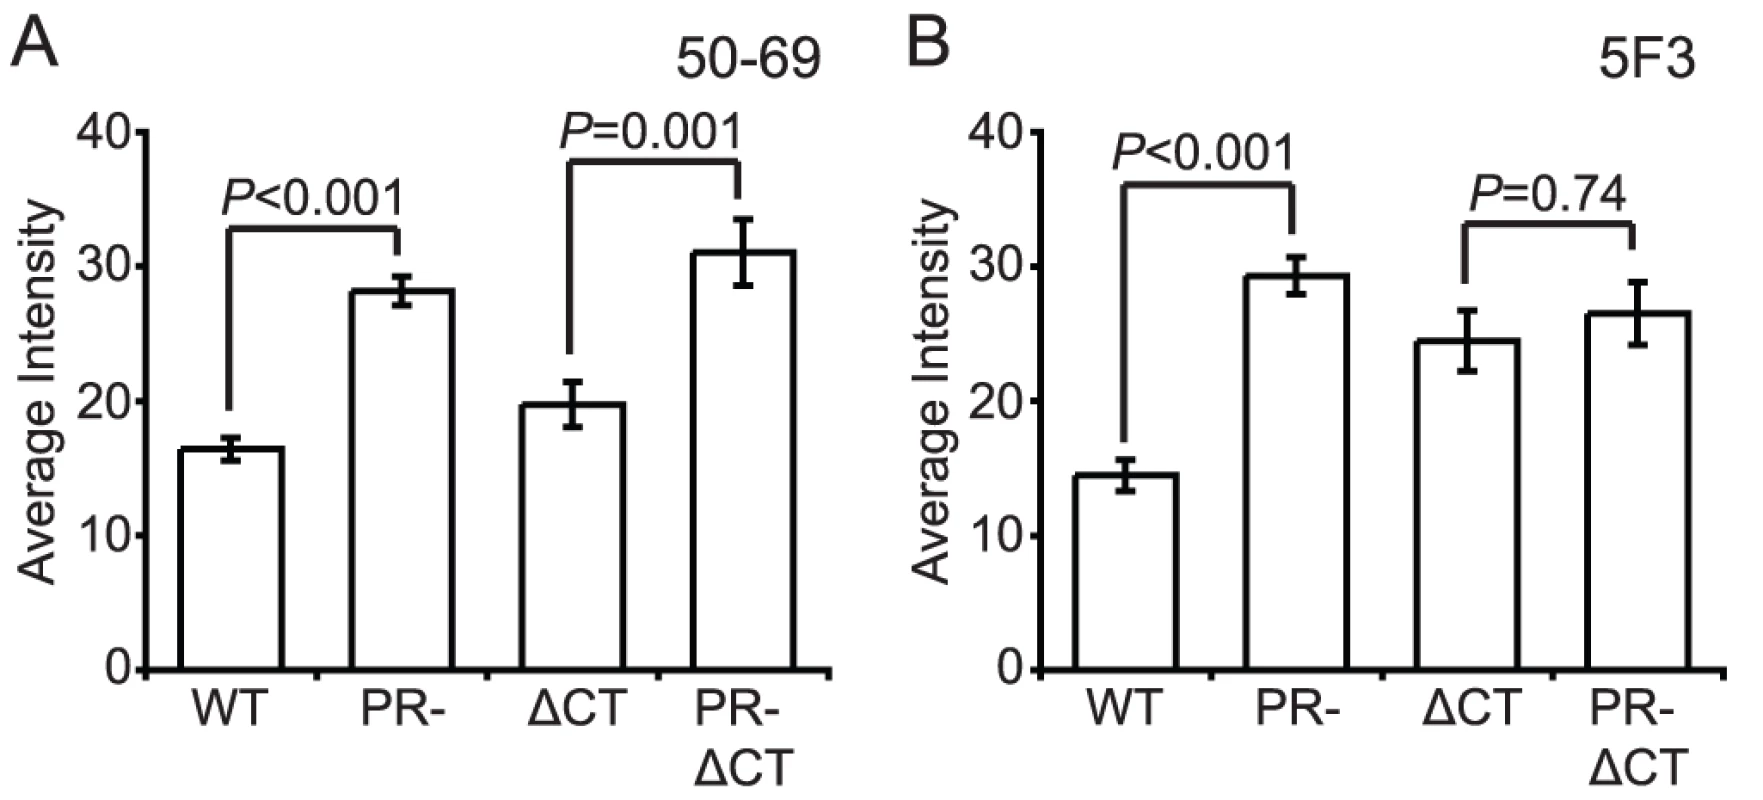 Antibody binding to non-neutralizing gp41 epitopes on HIV-1 virions.